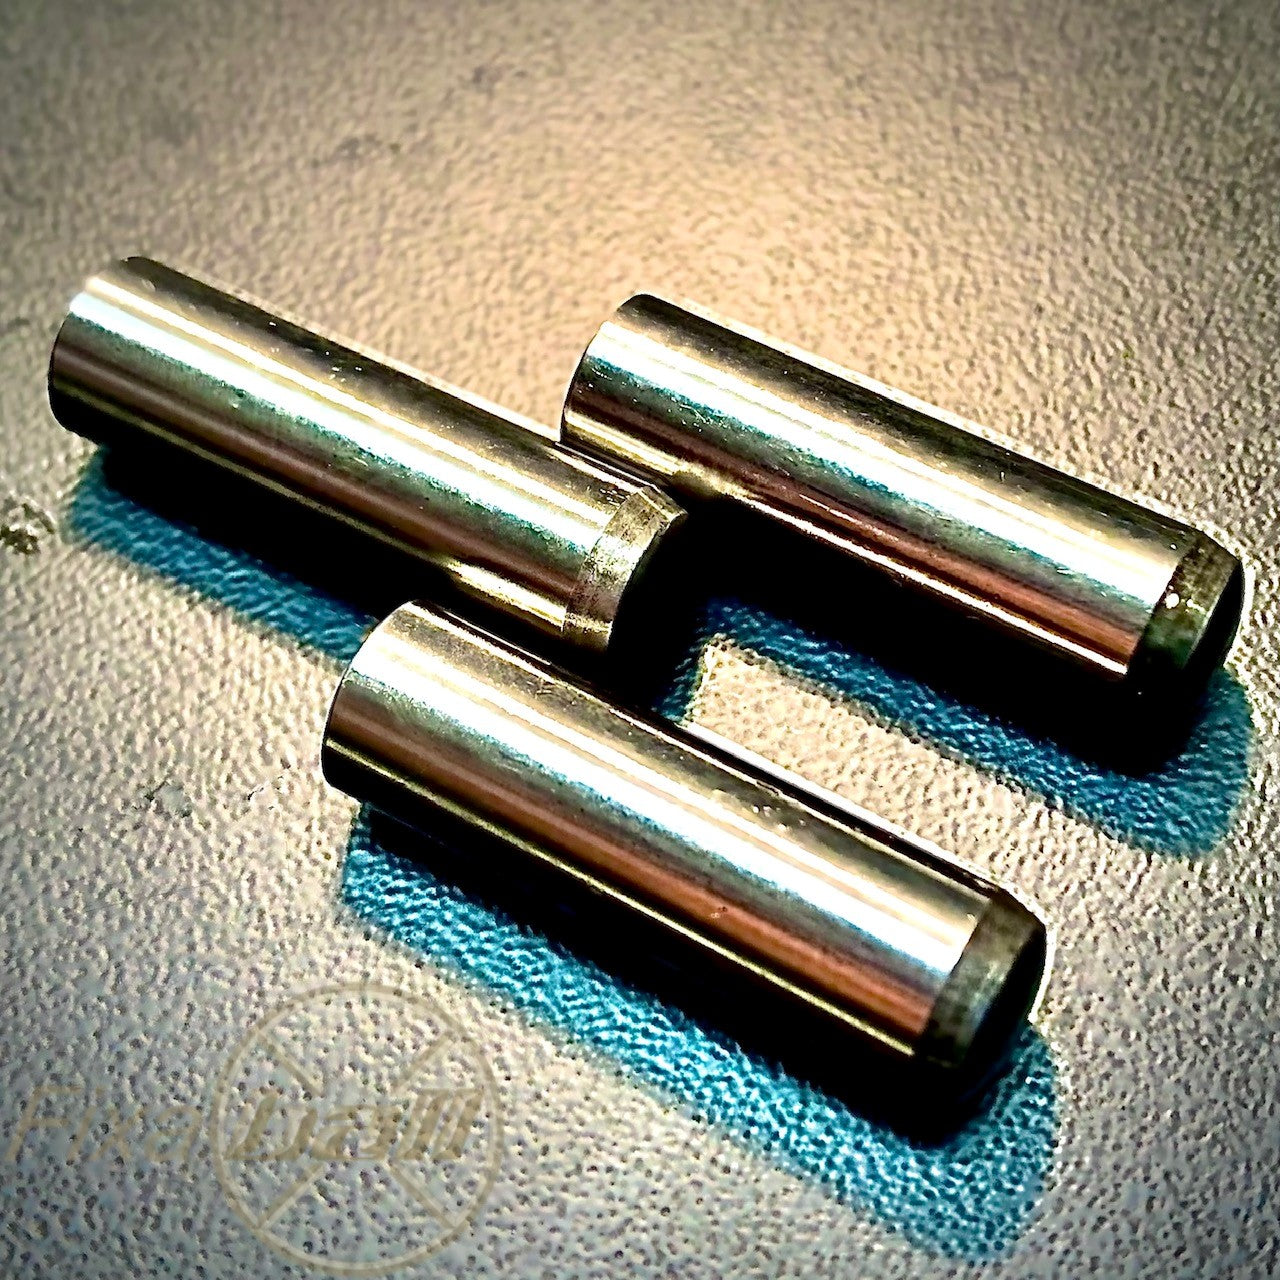 8mm, Dowel Pins Hardened & Ground, Steel, DIN 6325 Dowel Pins 8mm, Dowel Pins Hardened & Ground, Steel, DIN 6325 Dowel Pins – Harden and Ground